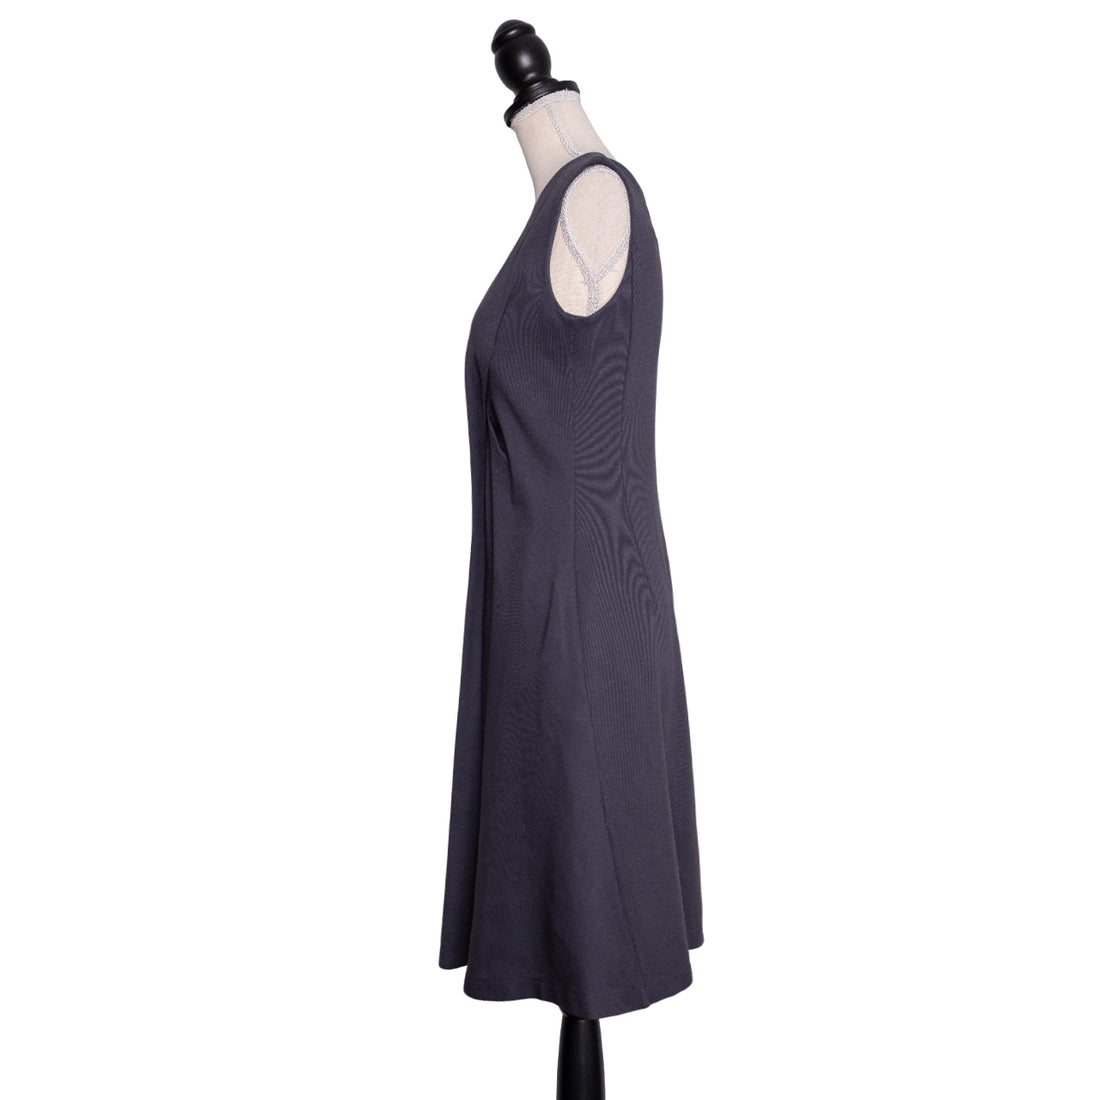 Jil Sander sleeveless sheath dress with ruffles